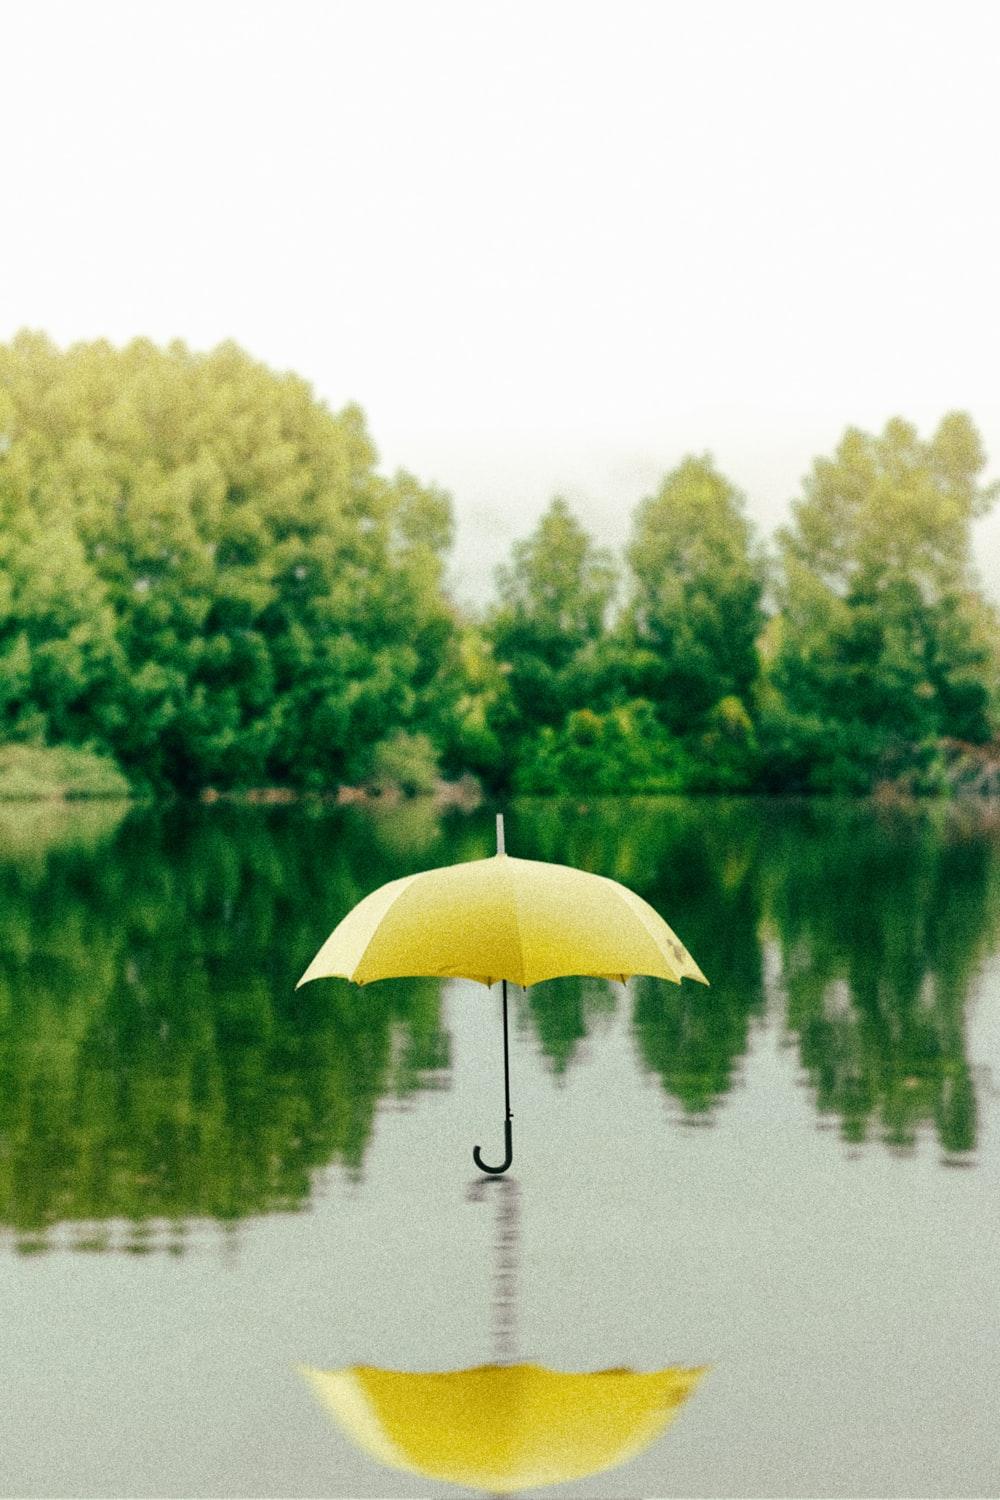 Umbrella Picture. Download Free Image